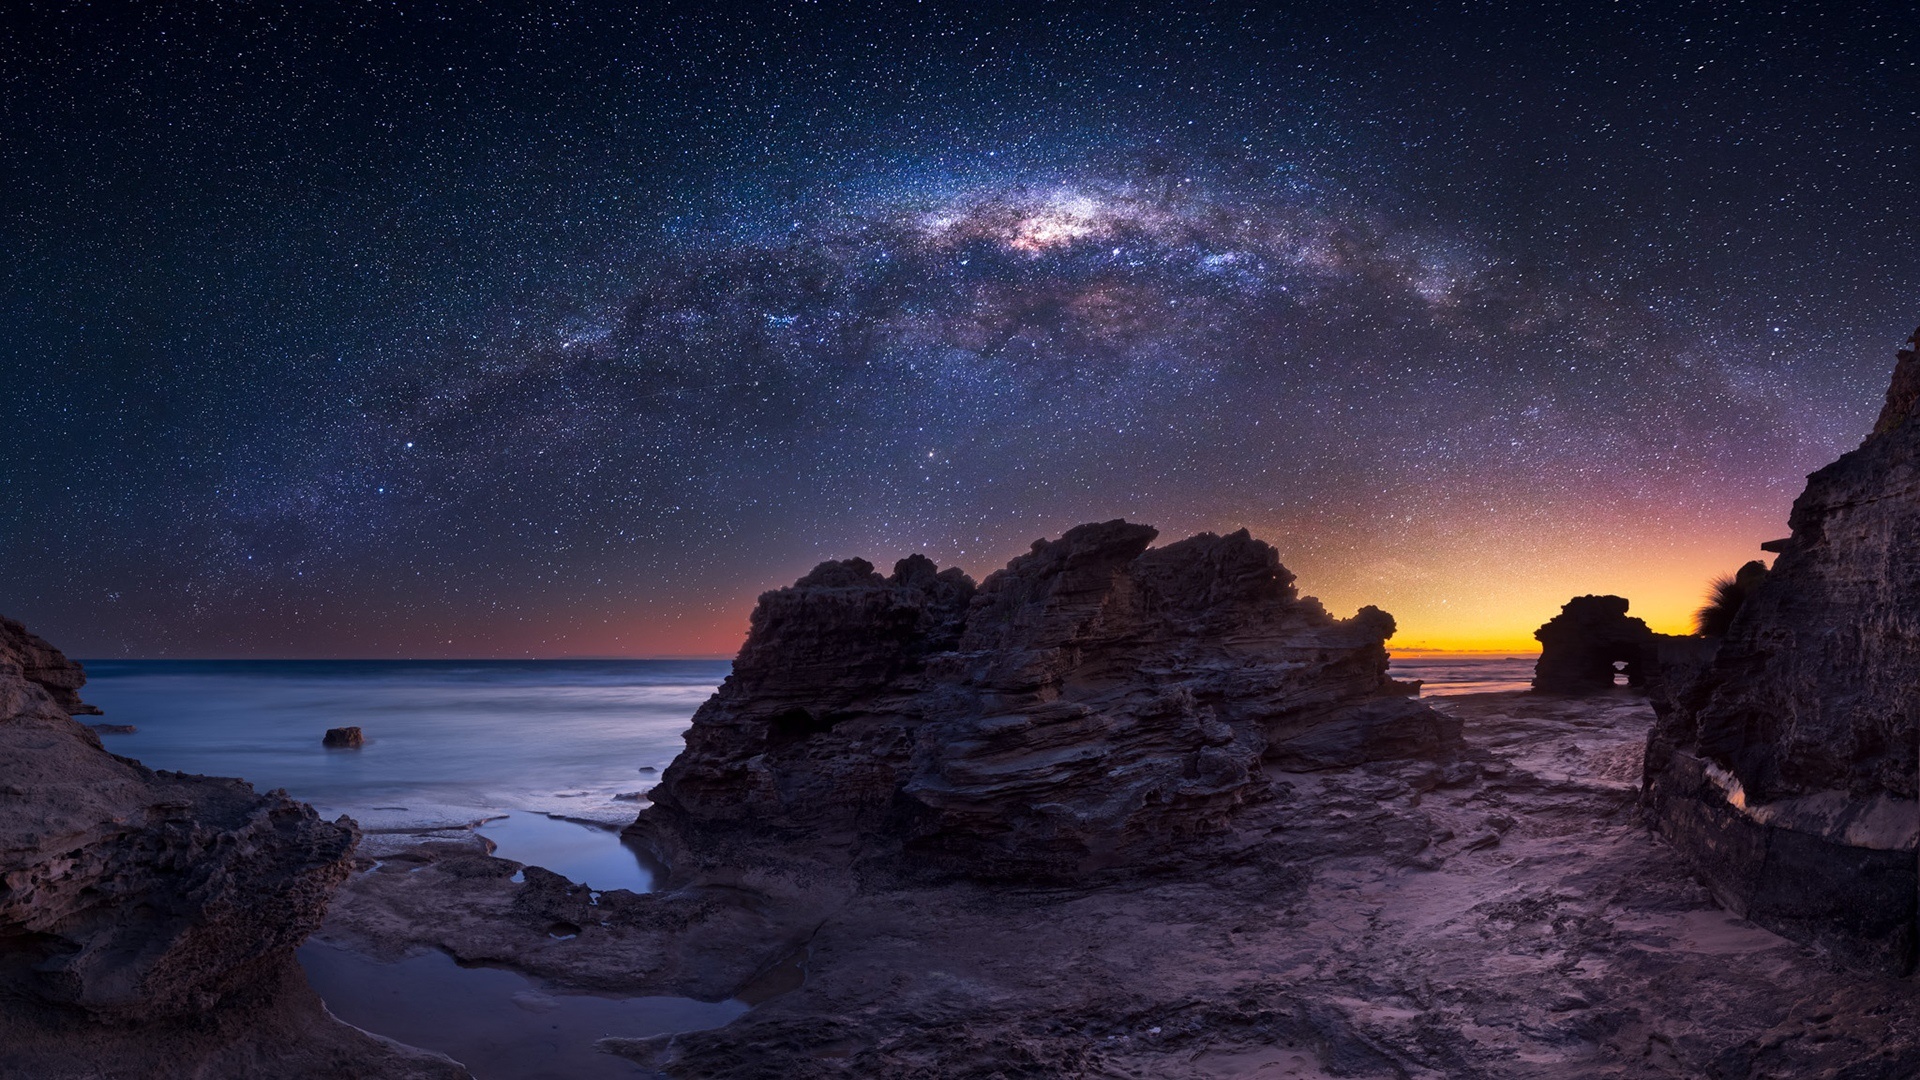 Milky way over the Australian seashore wallpaper - backiee